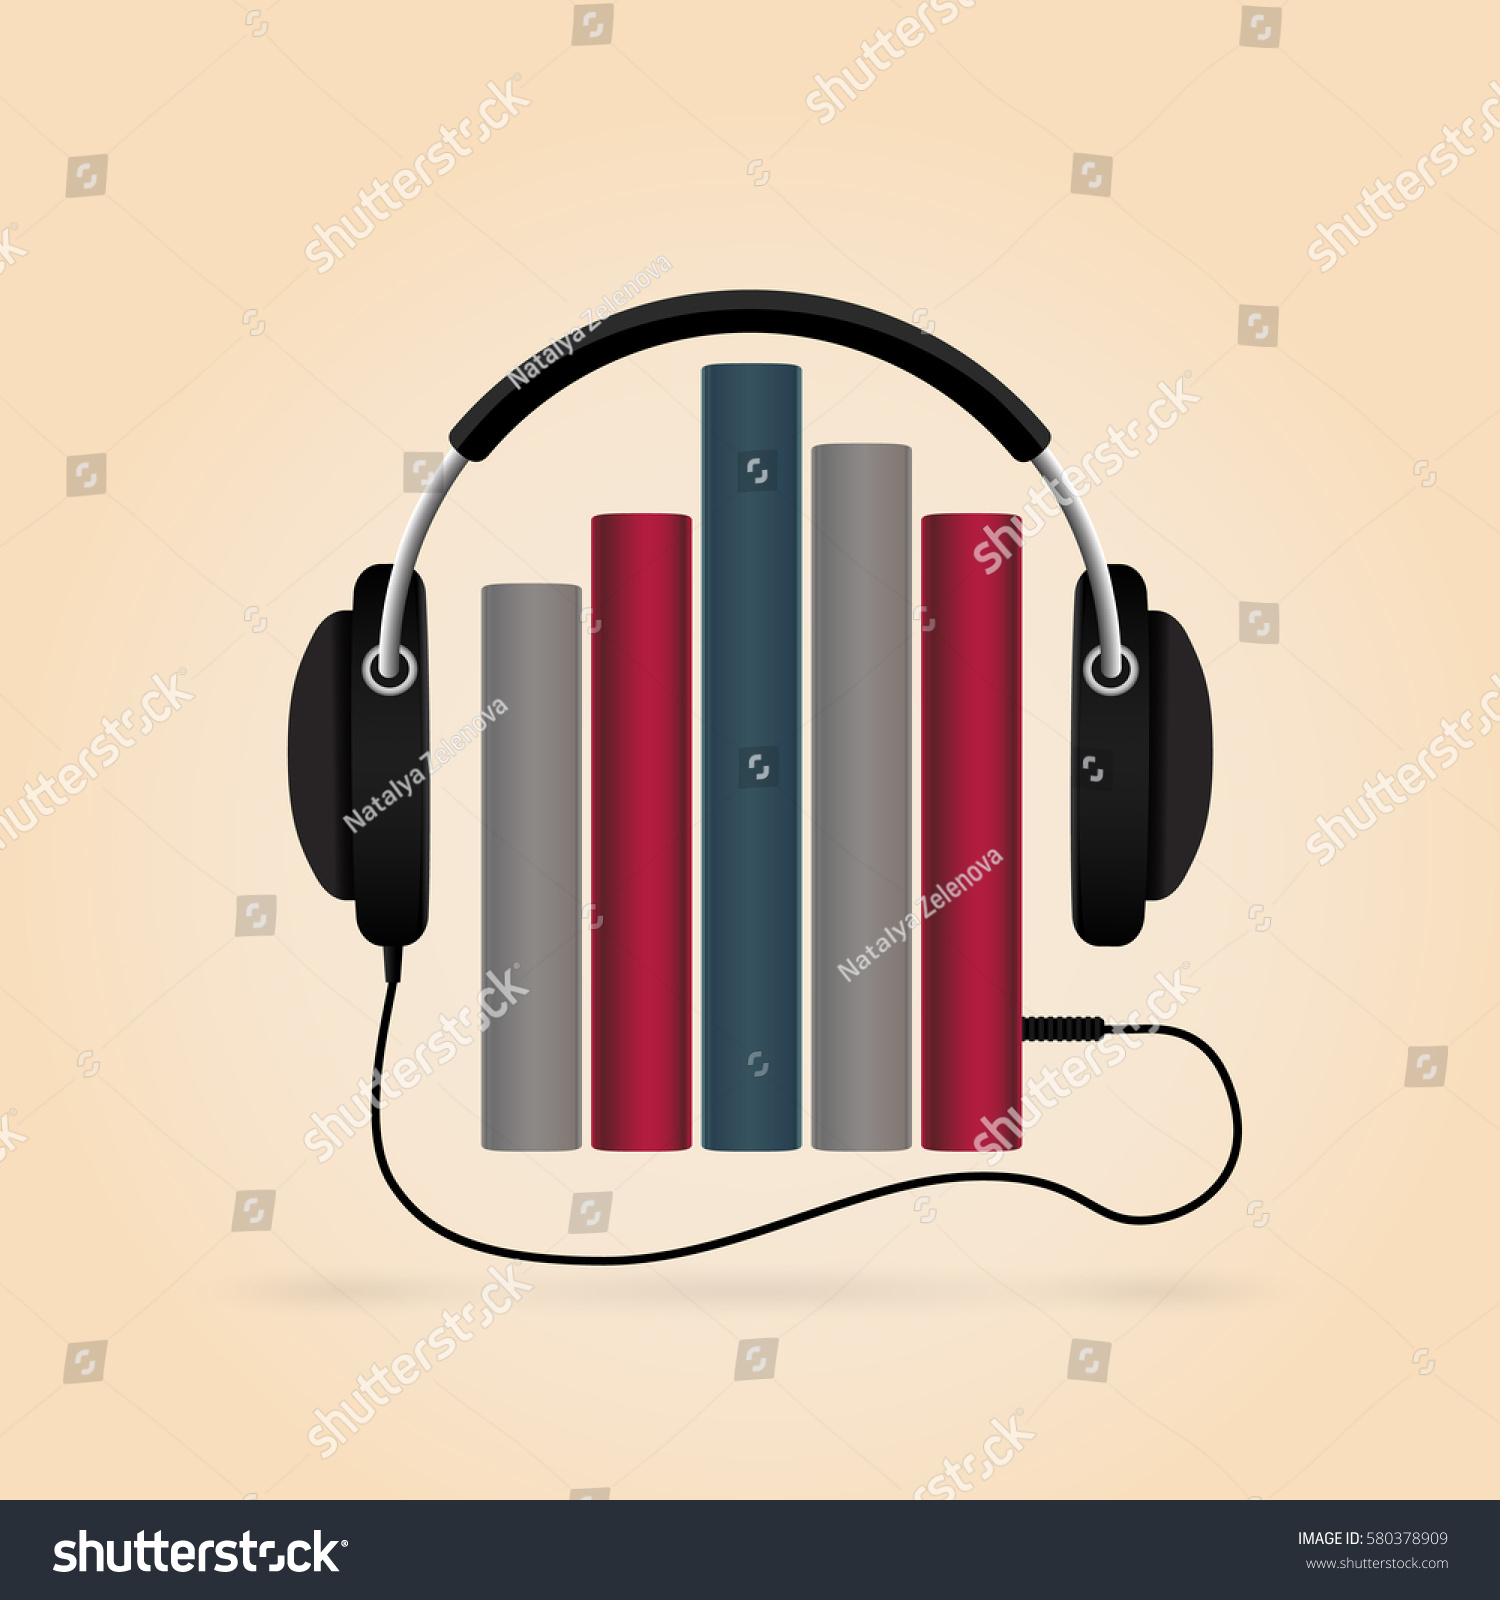 Audio book concept photo